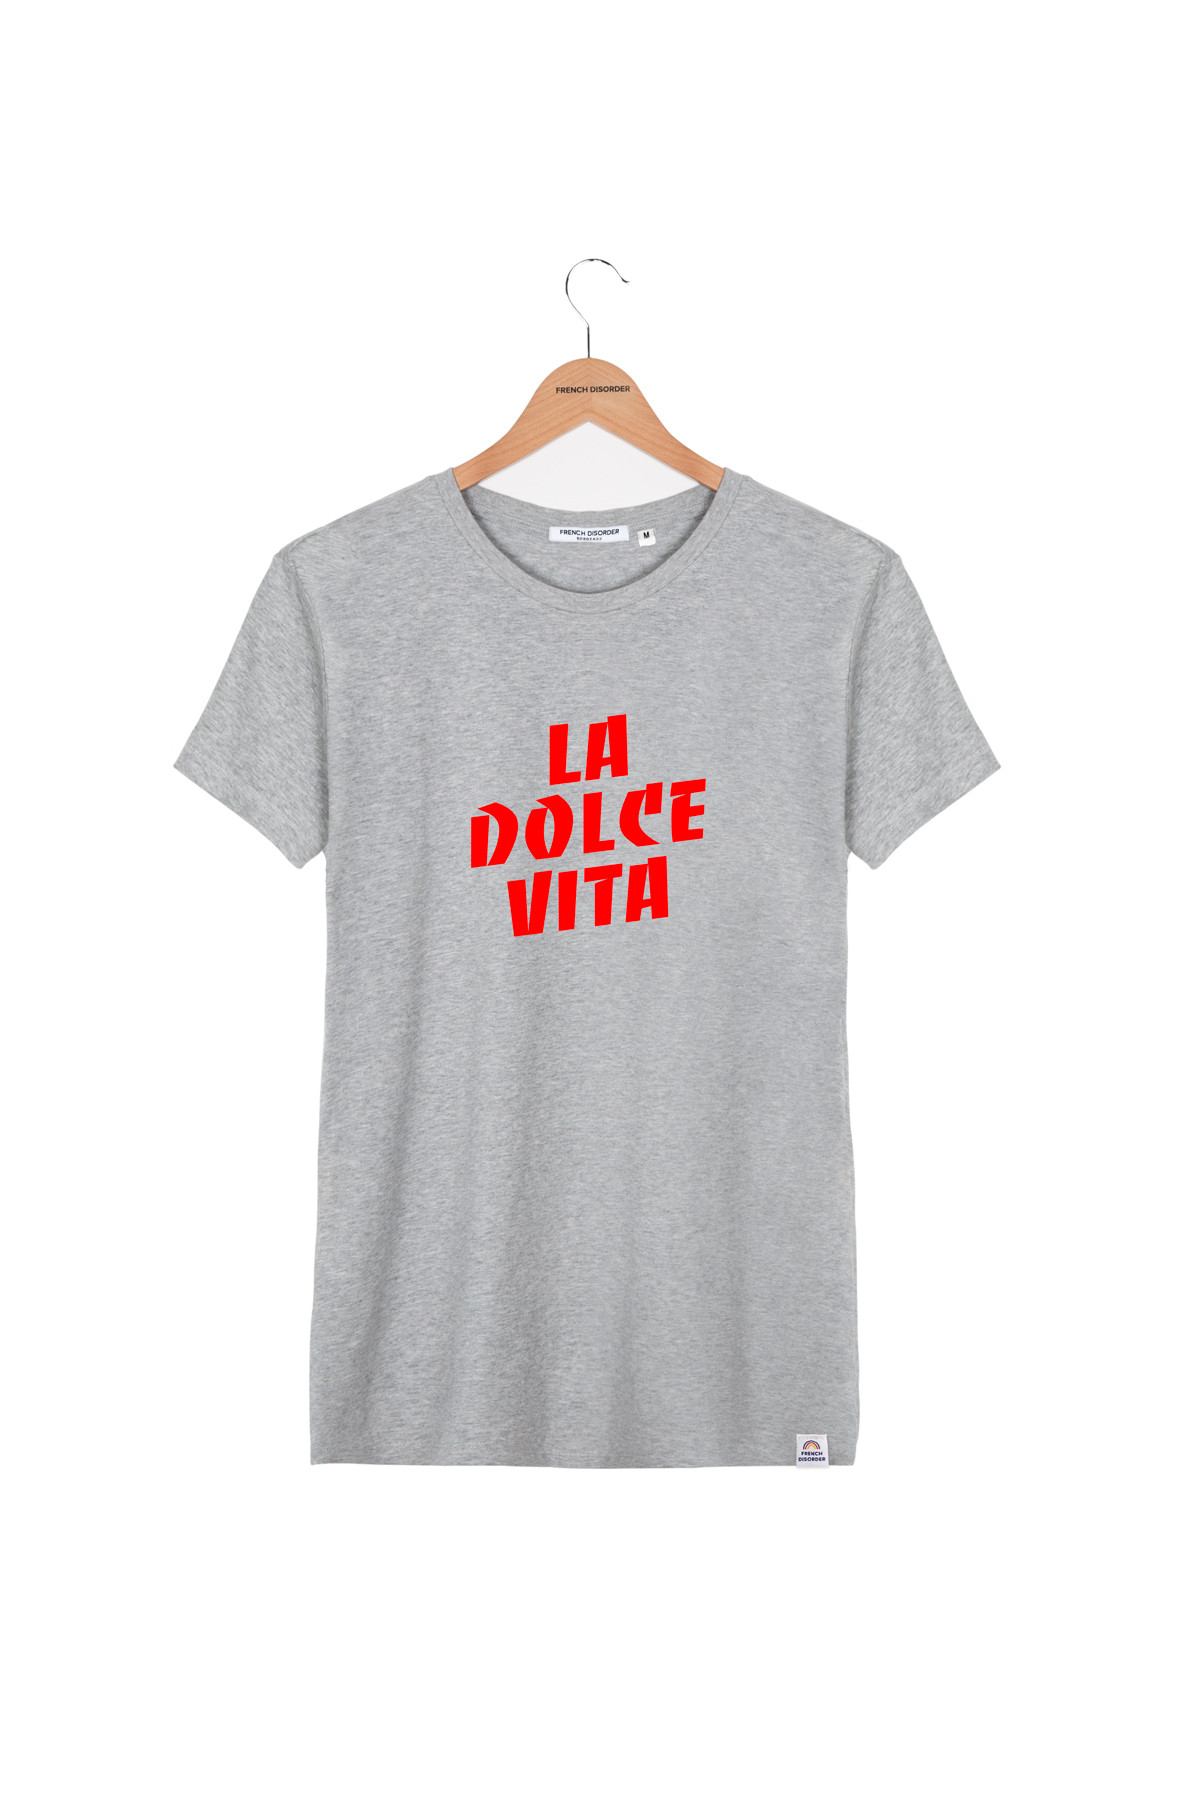 Photo de T-SHIRTS COL ROND Tshirt LA DOLCE VITA chez French Disorder